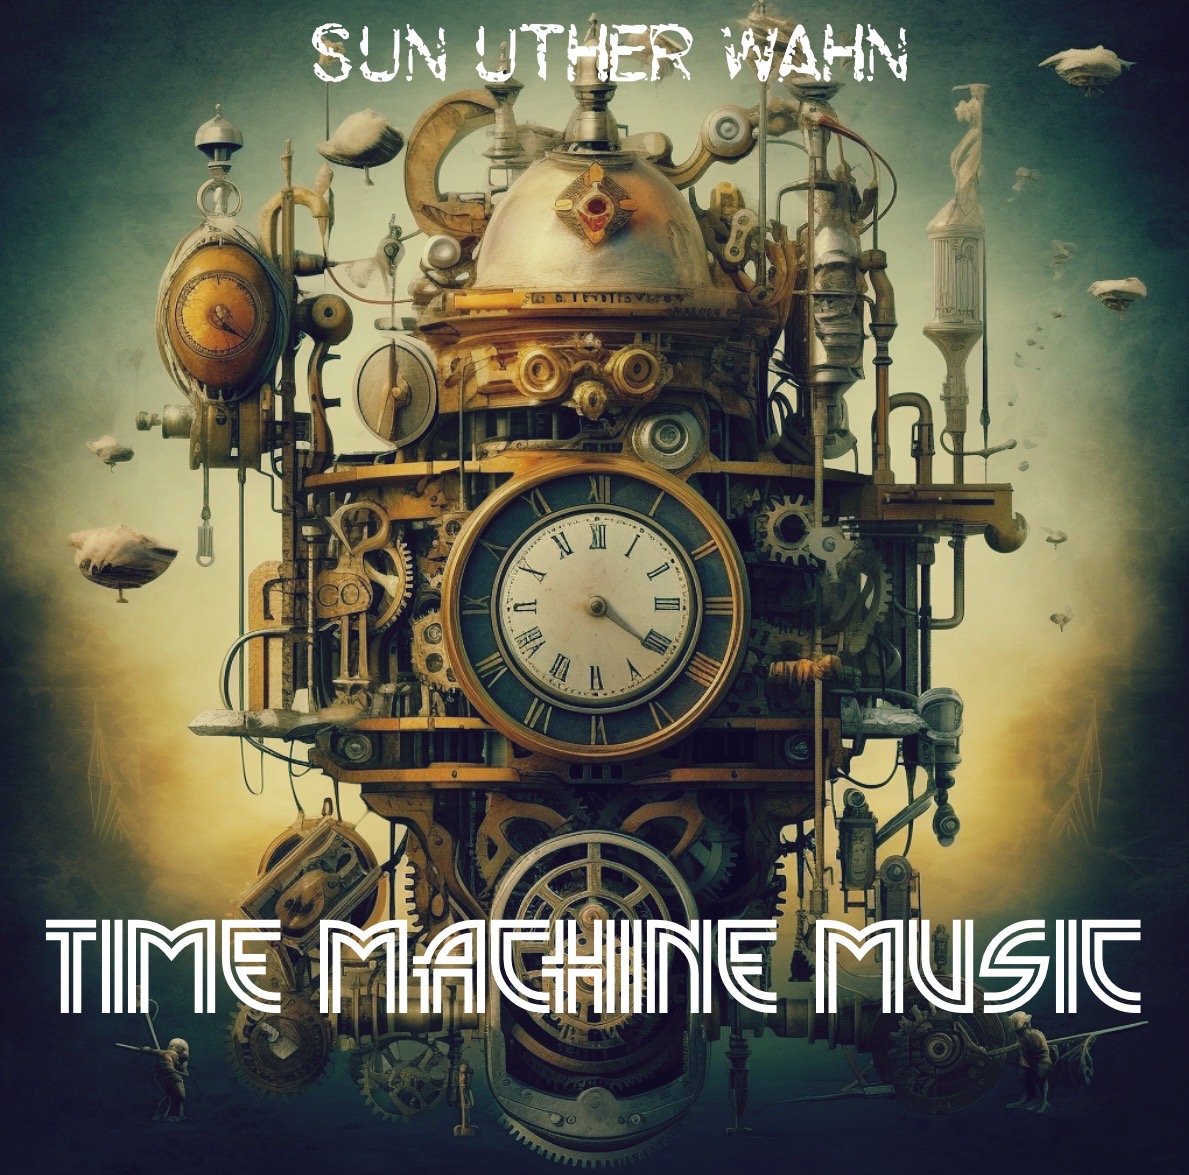 Time Machine Music out now!
#eclecticmusic #indiefolk #indiemusic #mississippimusic #sunutherwahn #jesusfamily #jesusmusic #jesuslovesyou
distrokid.com/hyperfollow/su…